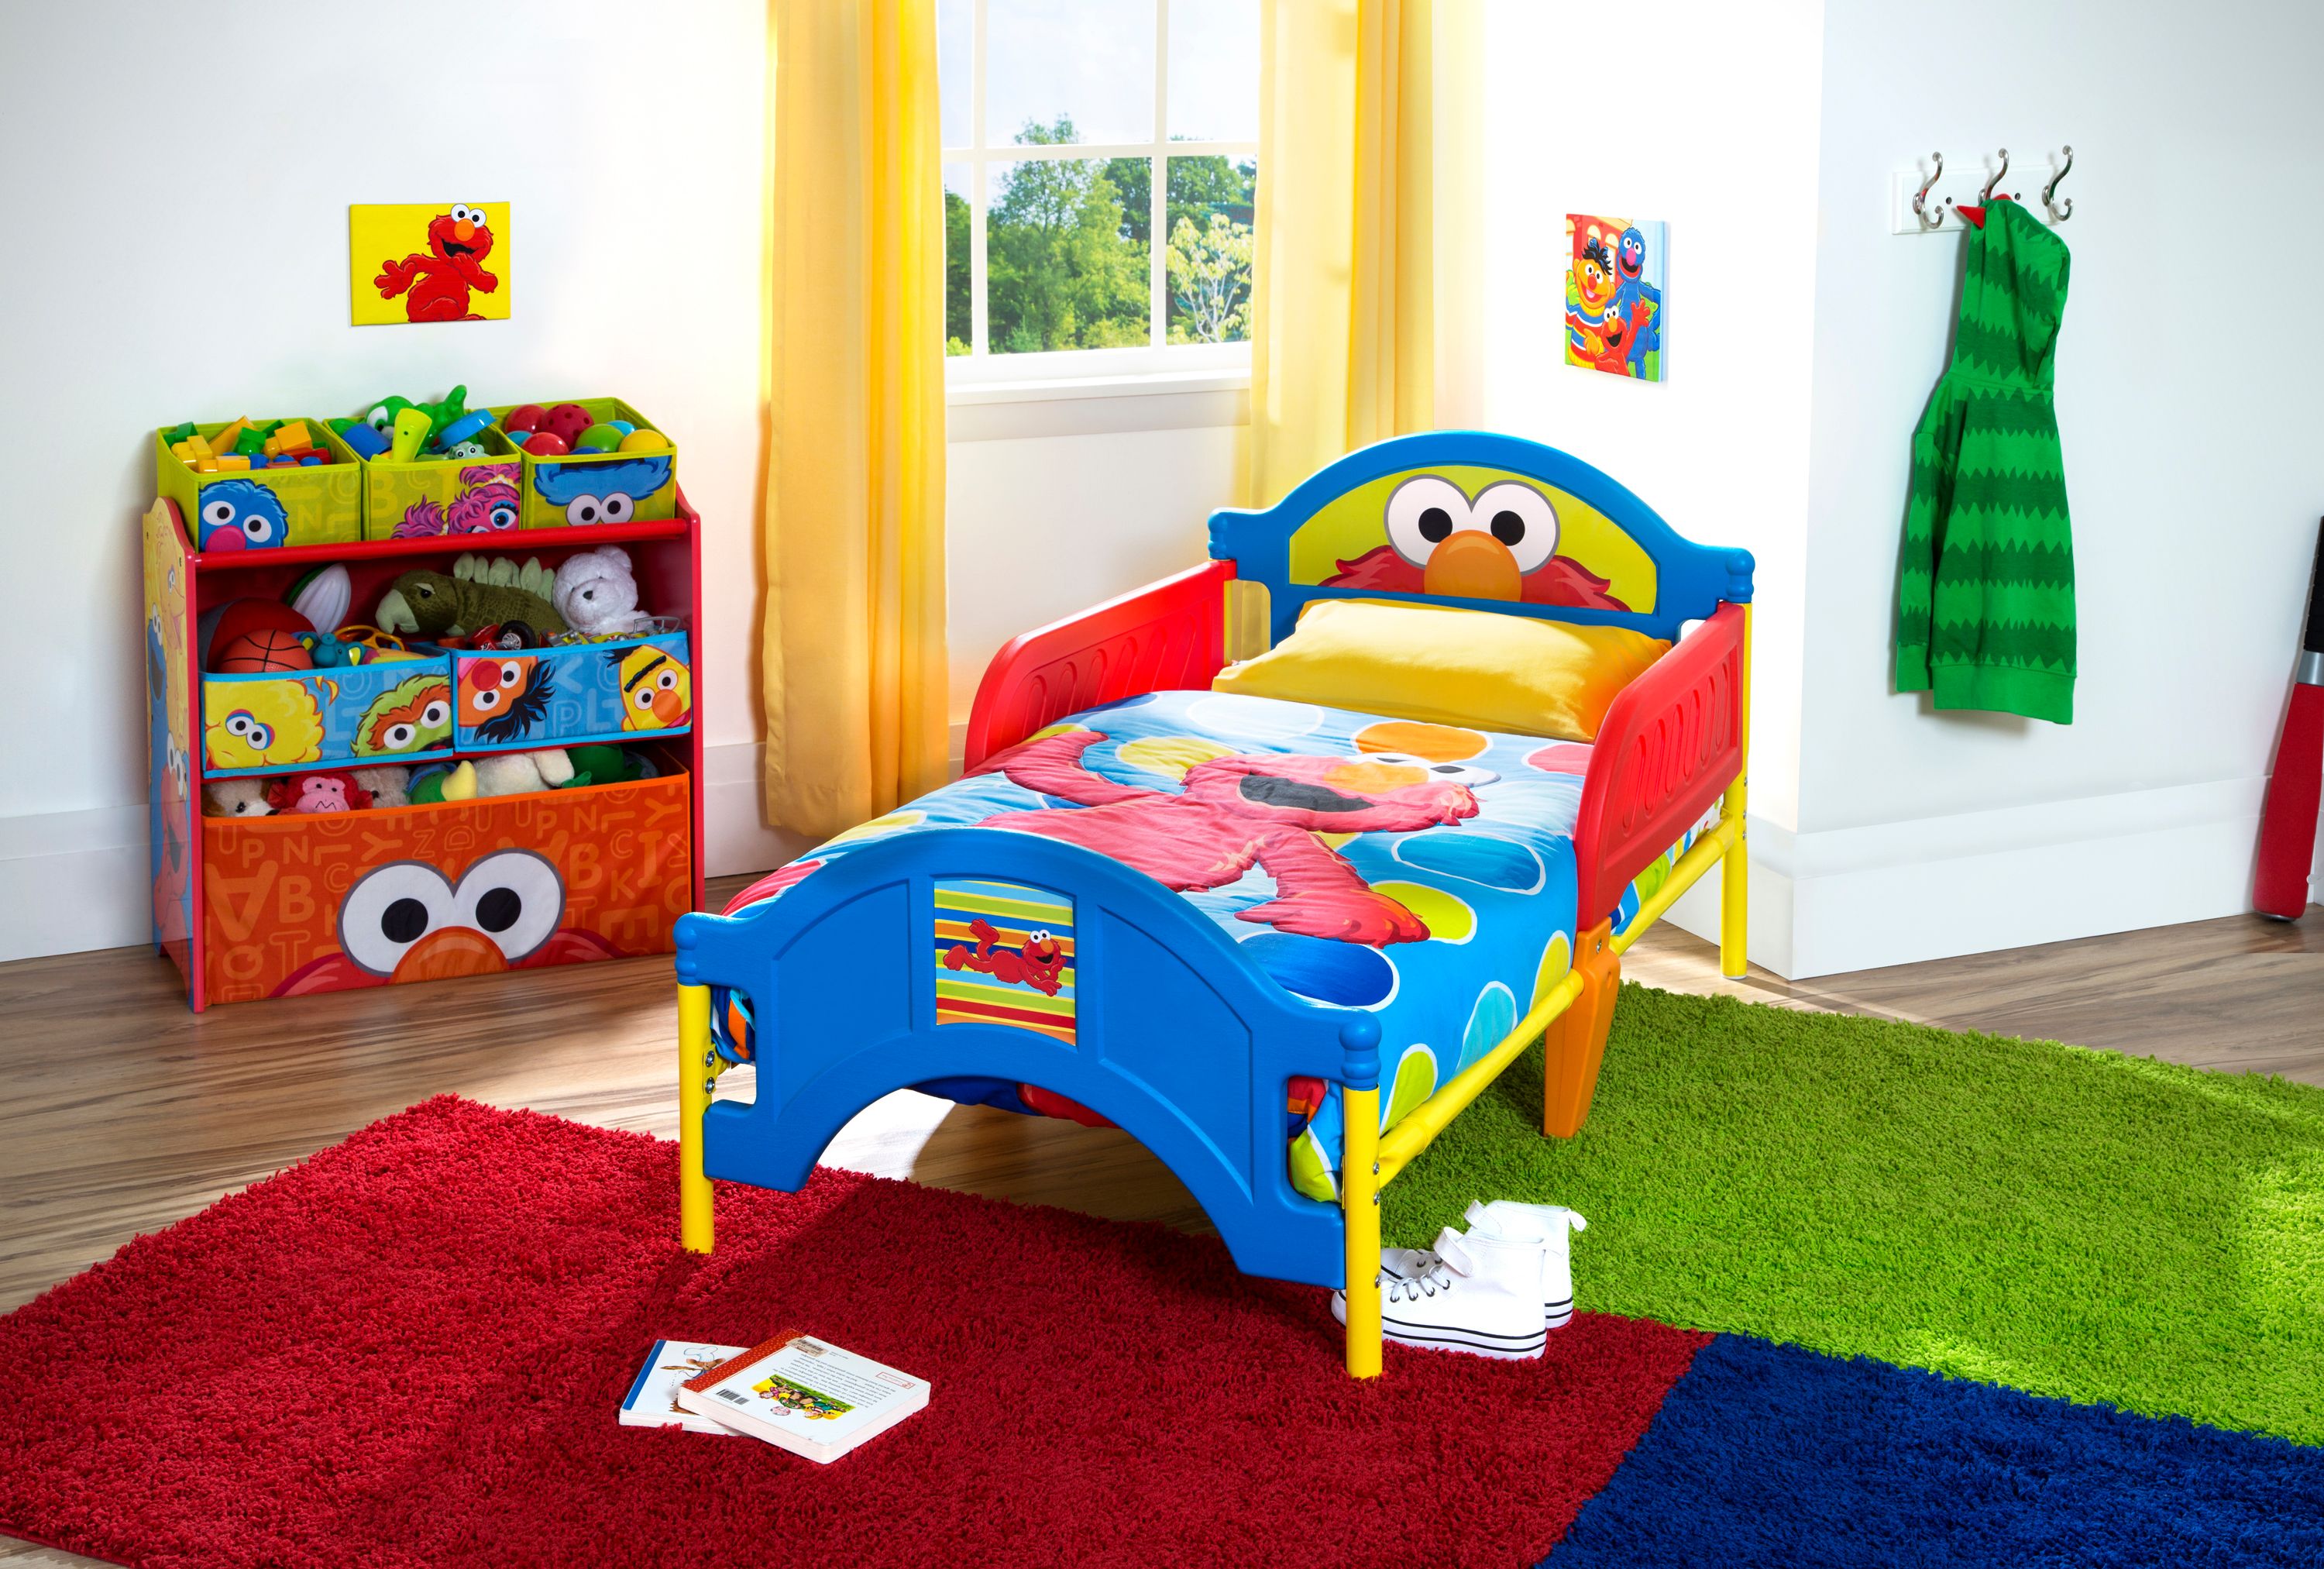 Delta Children Sesame Street Elmo Plastic Toddler Bed, Red and Blue - image 3 of 5